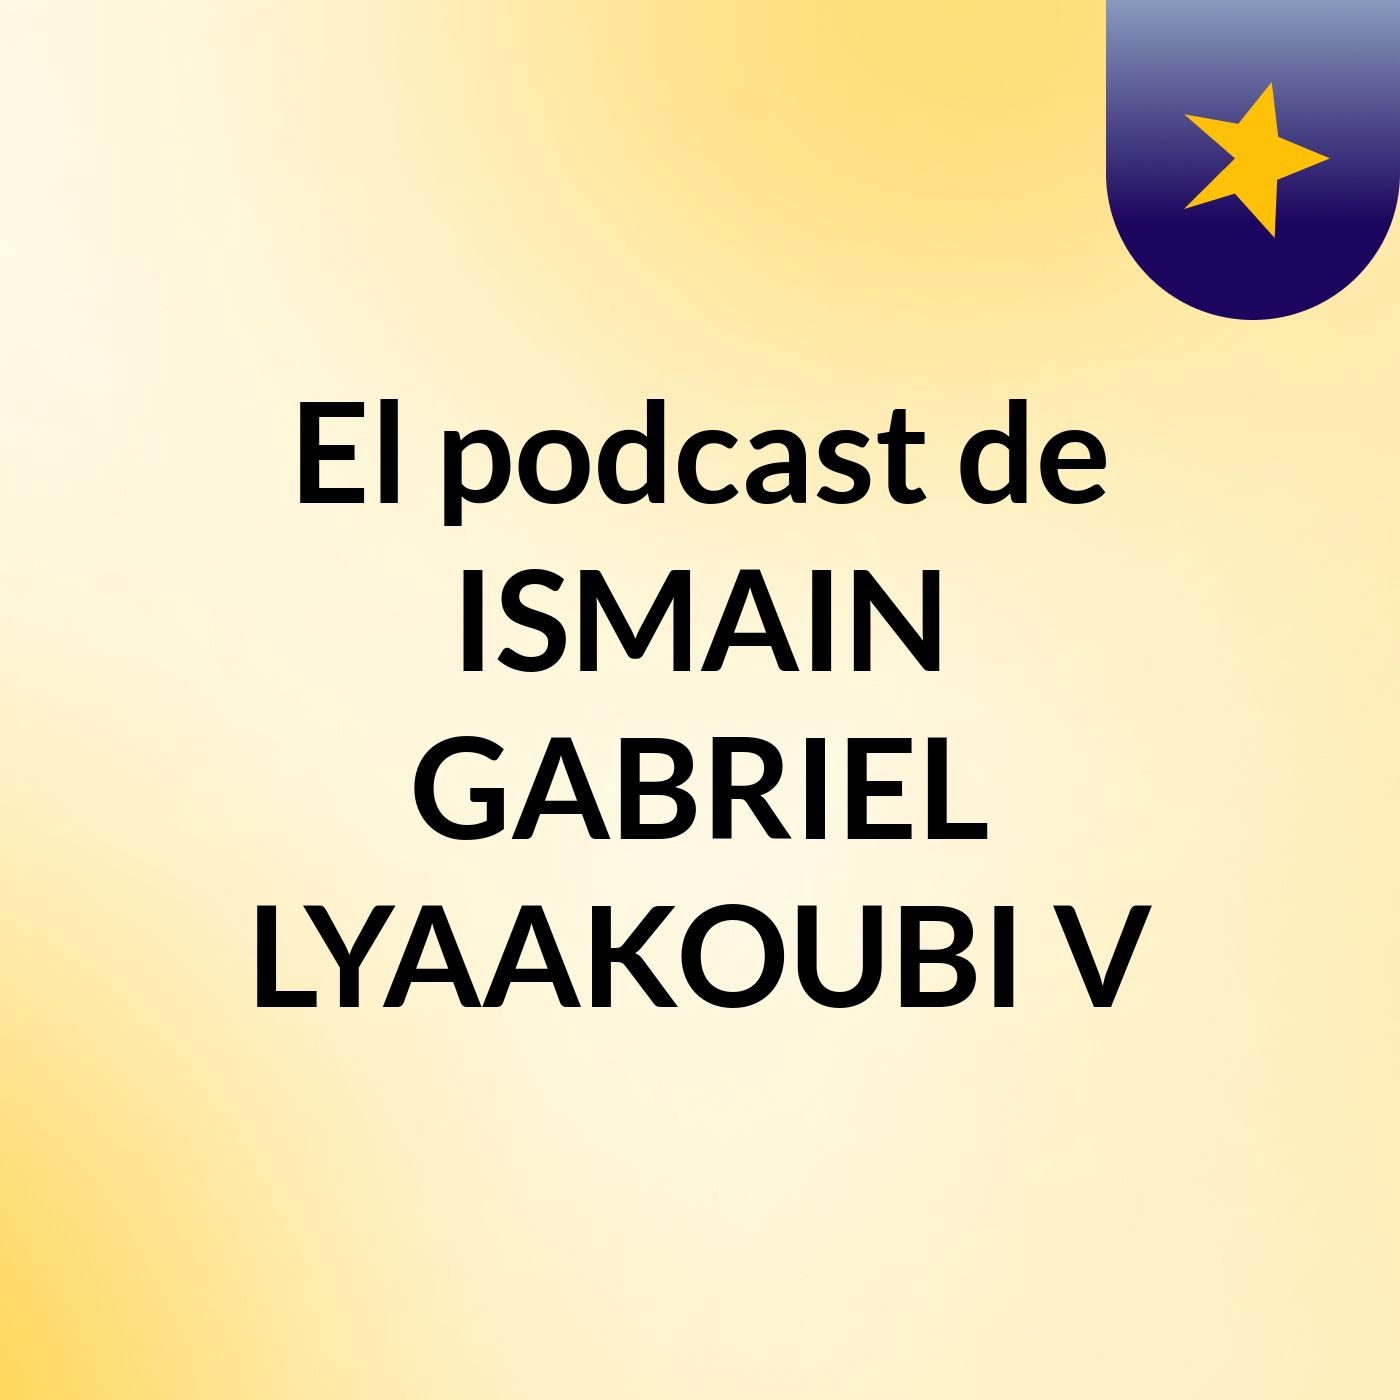 Episodio 5 - El podcast de ISMAIN GABRIEL LYAAKOUBI V